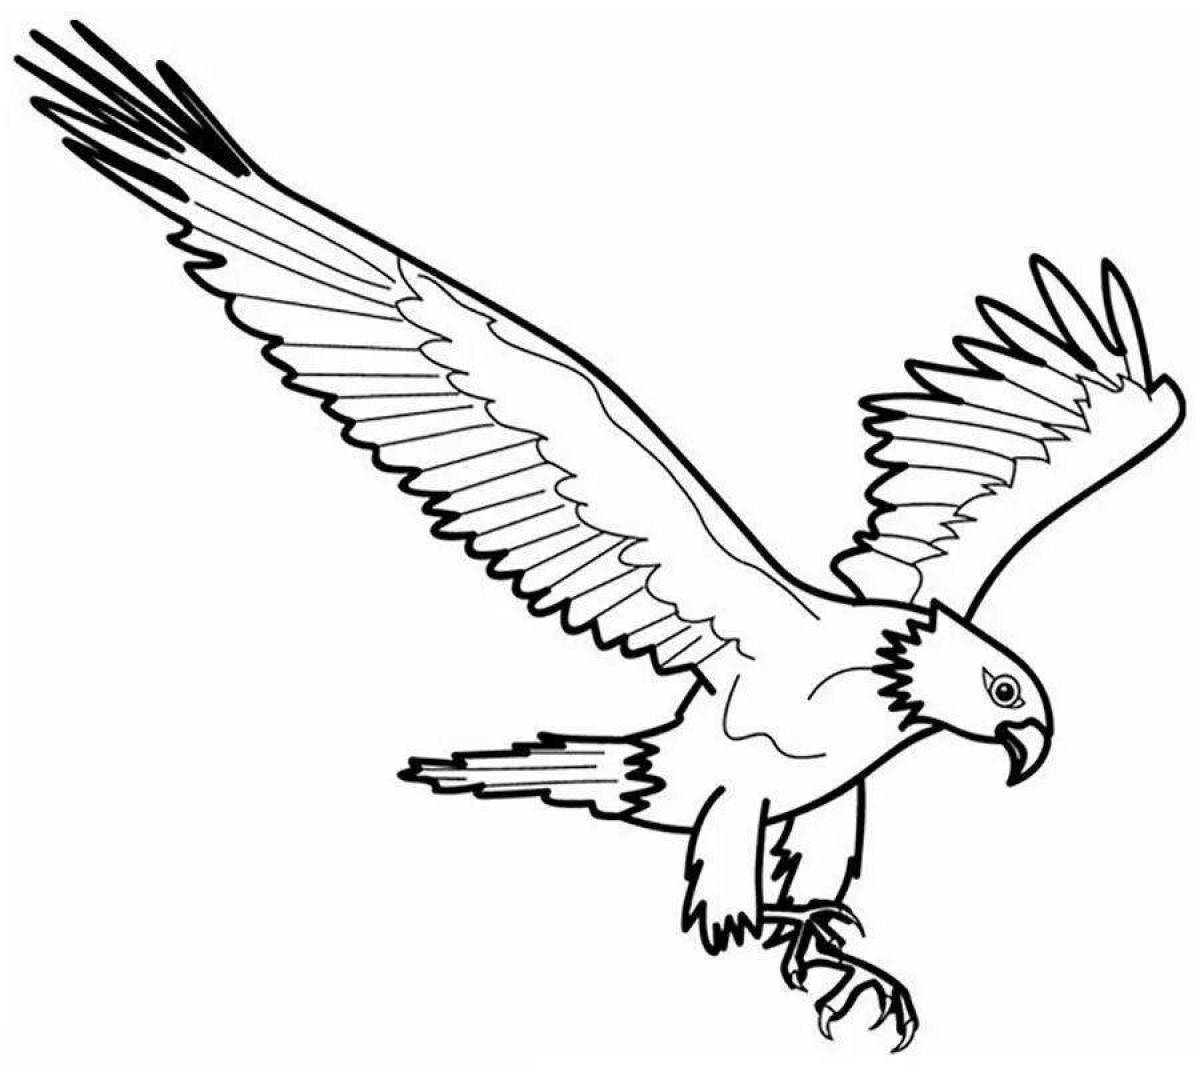 Splendorous eagle coloring book for kids